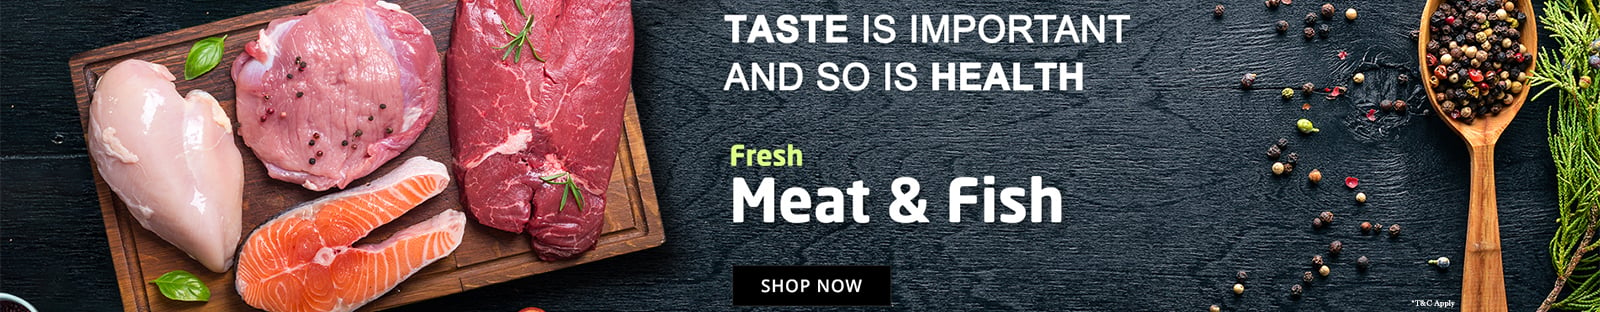 Meat & Fish Banner.jpg